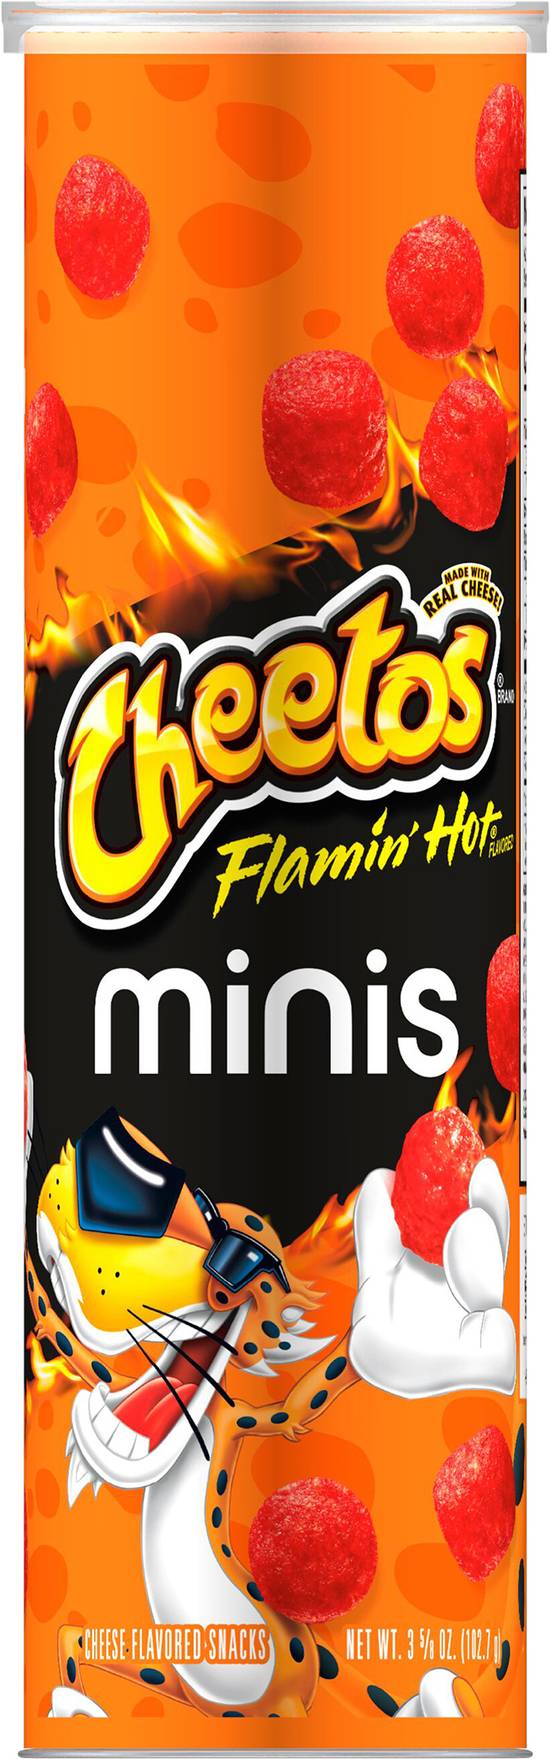 Cheetos Minis Flamin' Hot Cheese Flavored Snacks (hot)